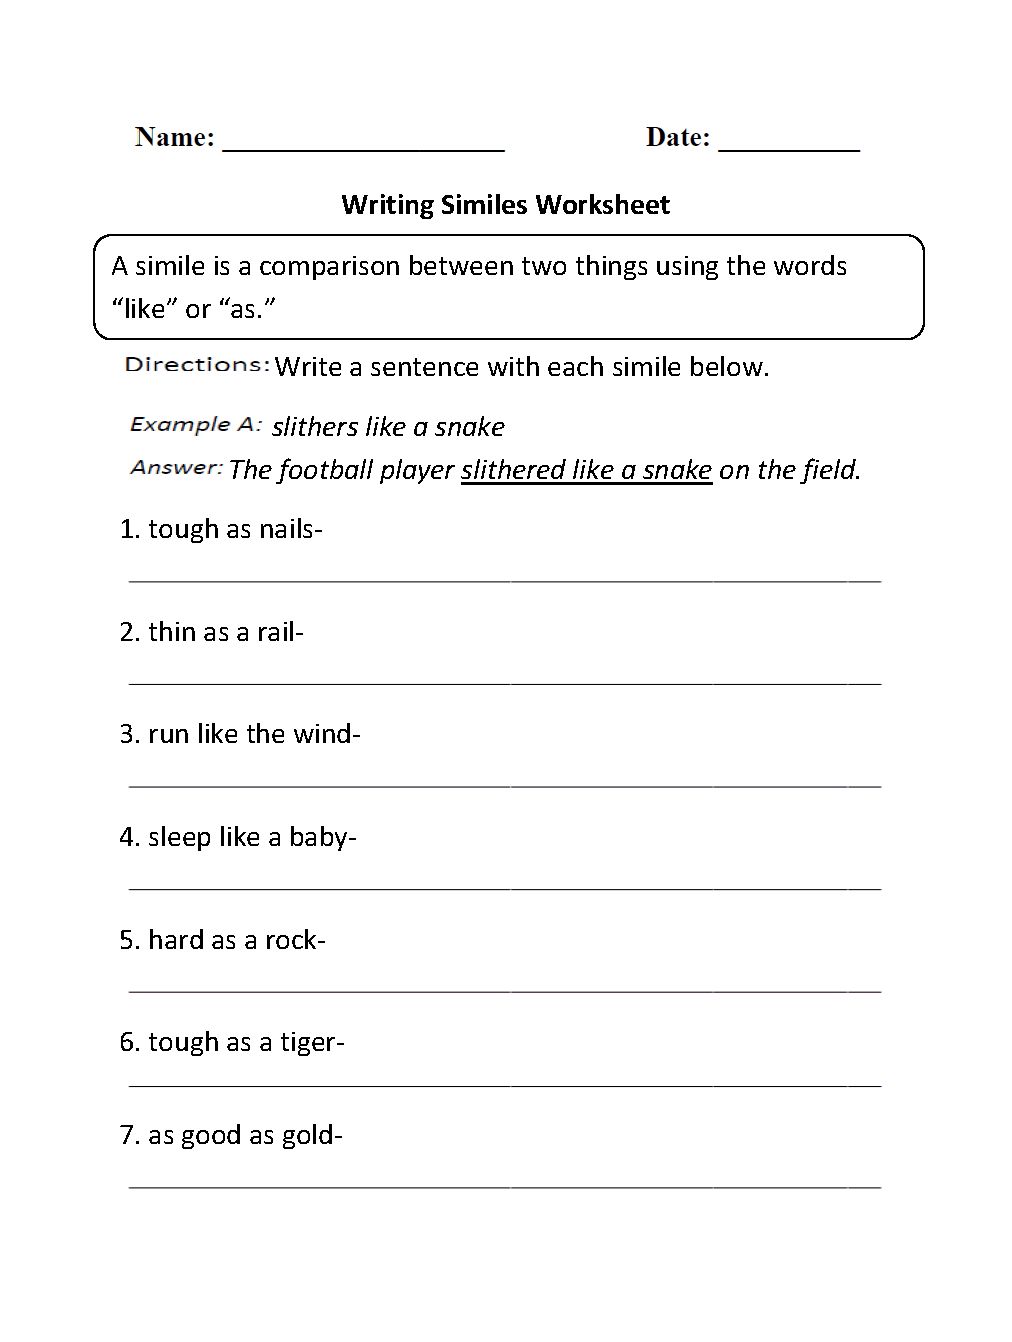 Writing Similes Worksheet